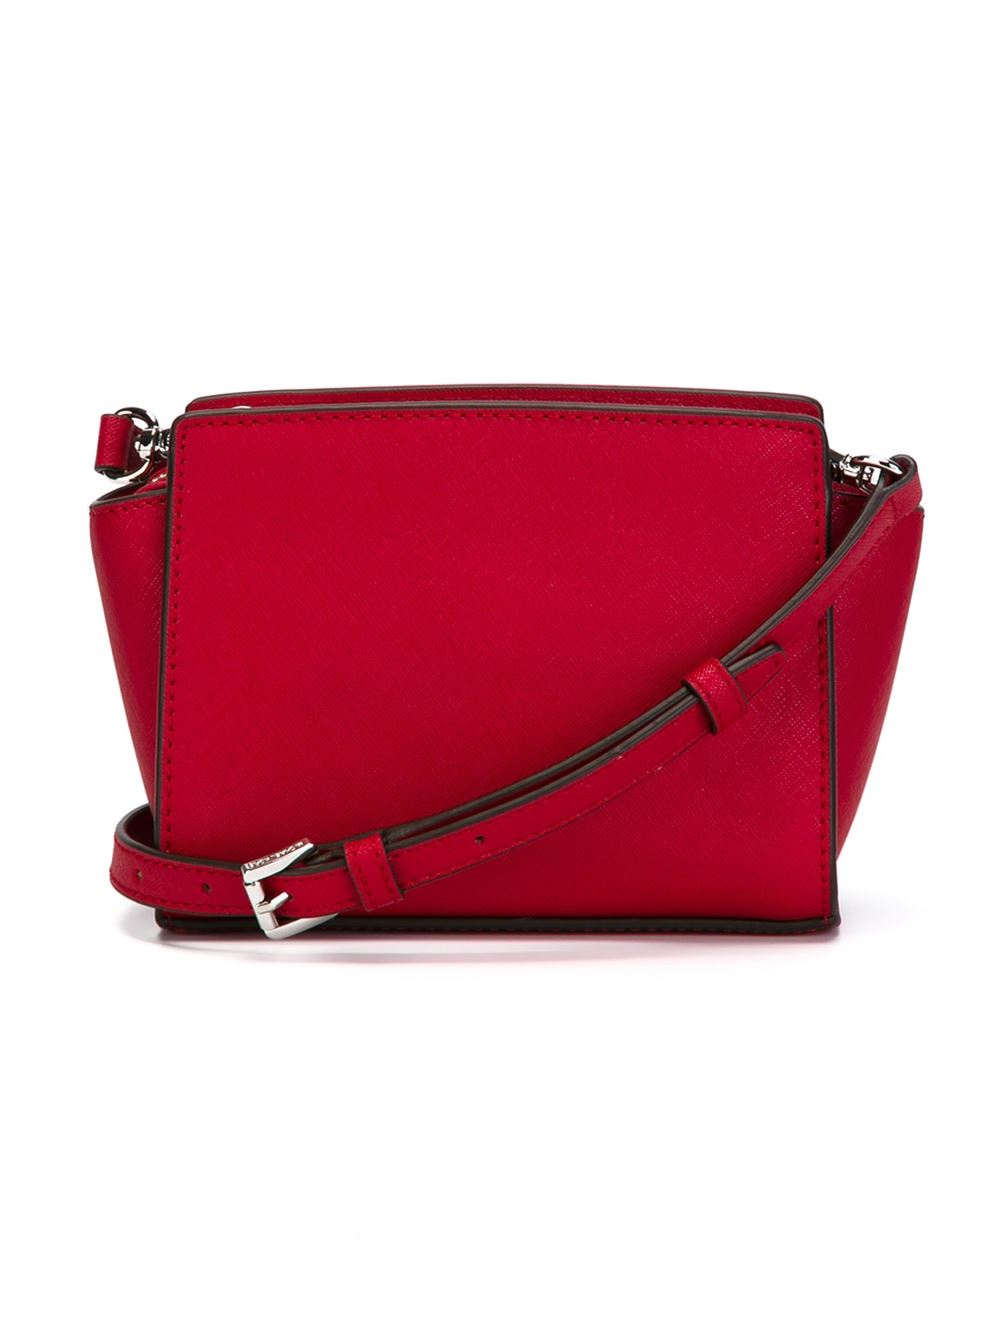 Lyst - Michael Michael Kors Selma Mini Leather Cross-Body Bag in Red